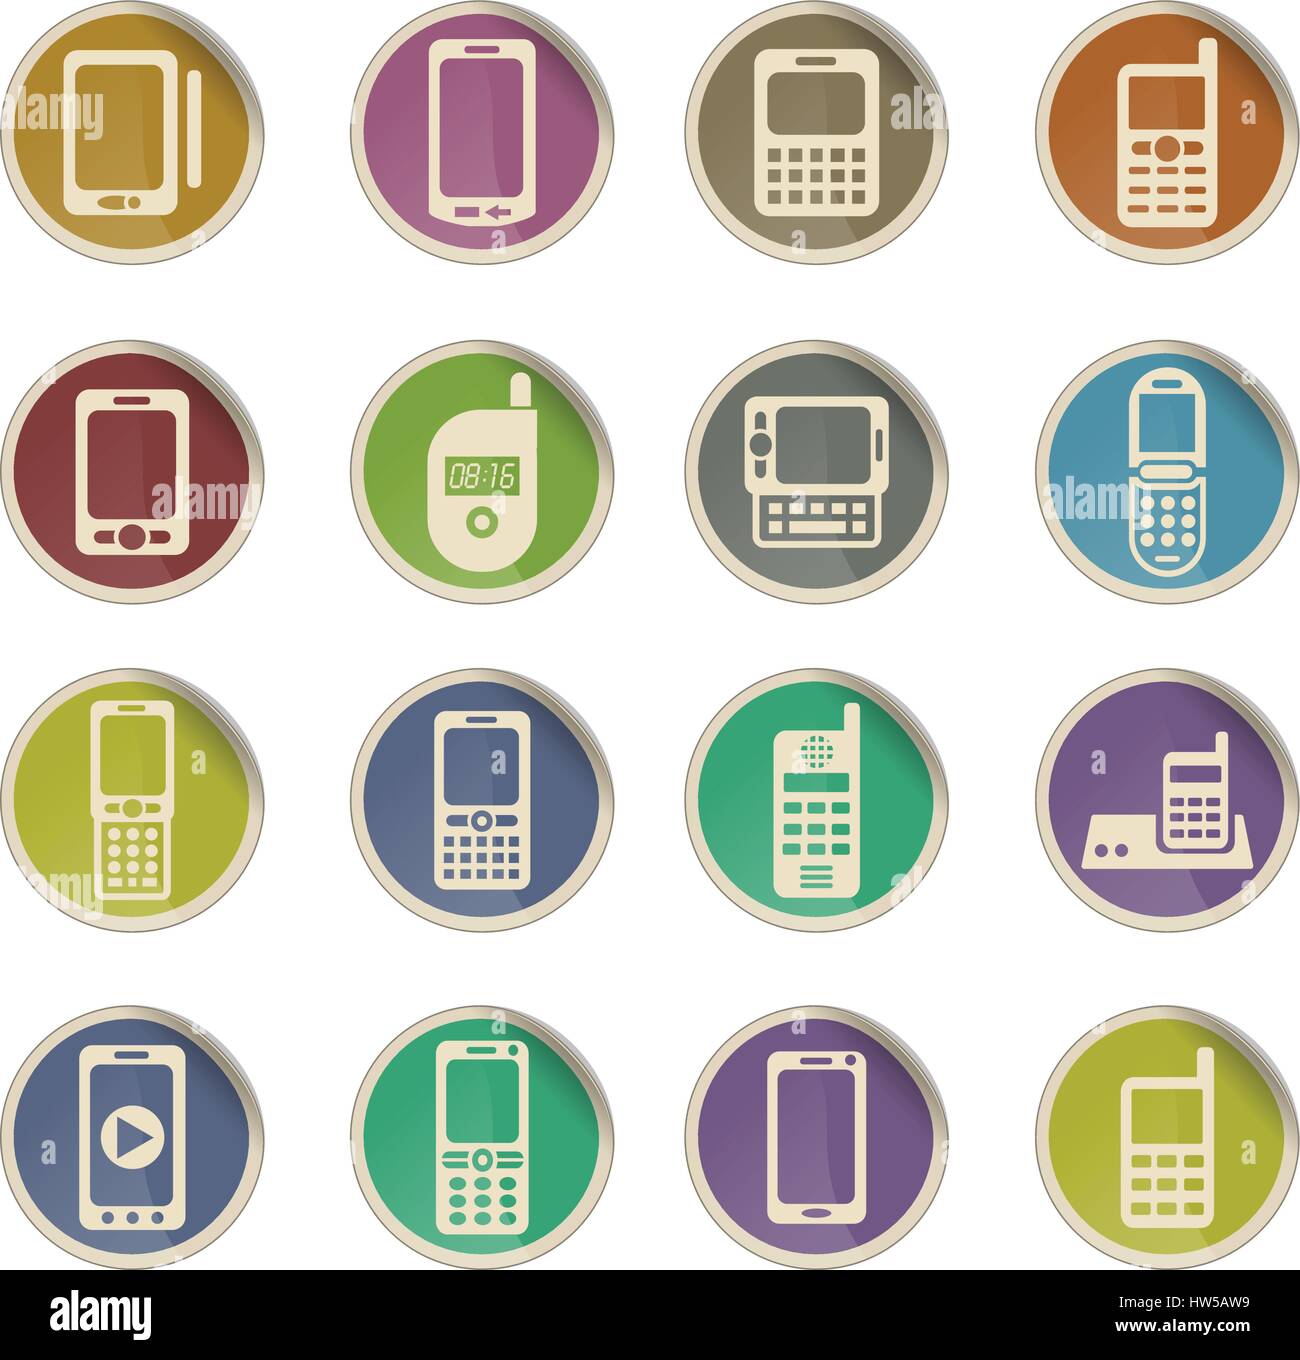 Handys web Icons auf Farbe Papier-Etiketten Stock Vektor